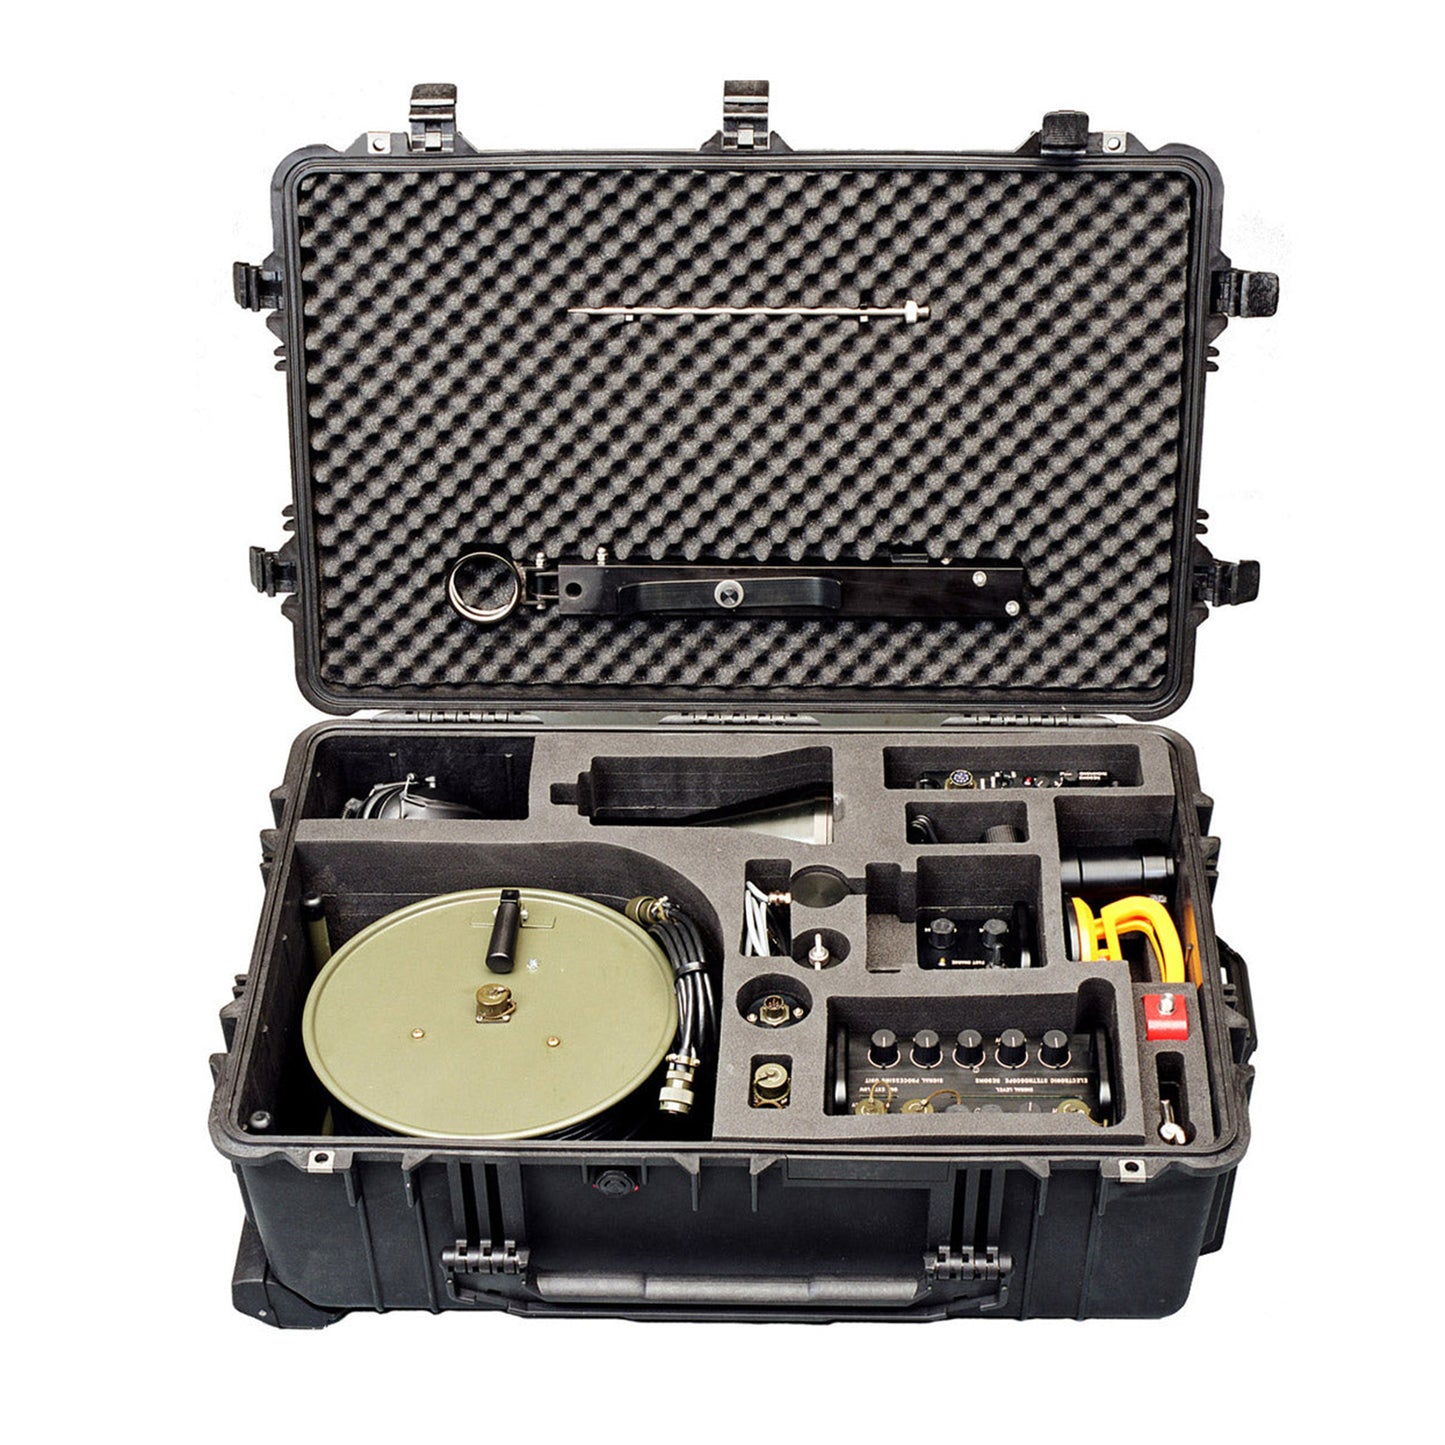 RE80 M2 Stethoscope Electronic Kit